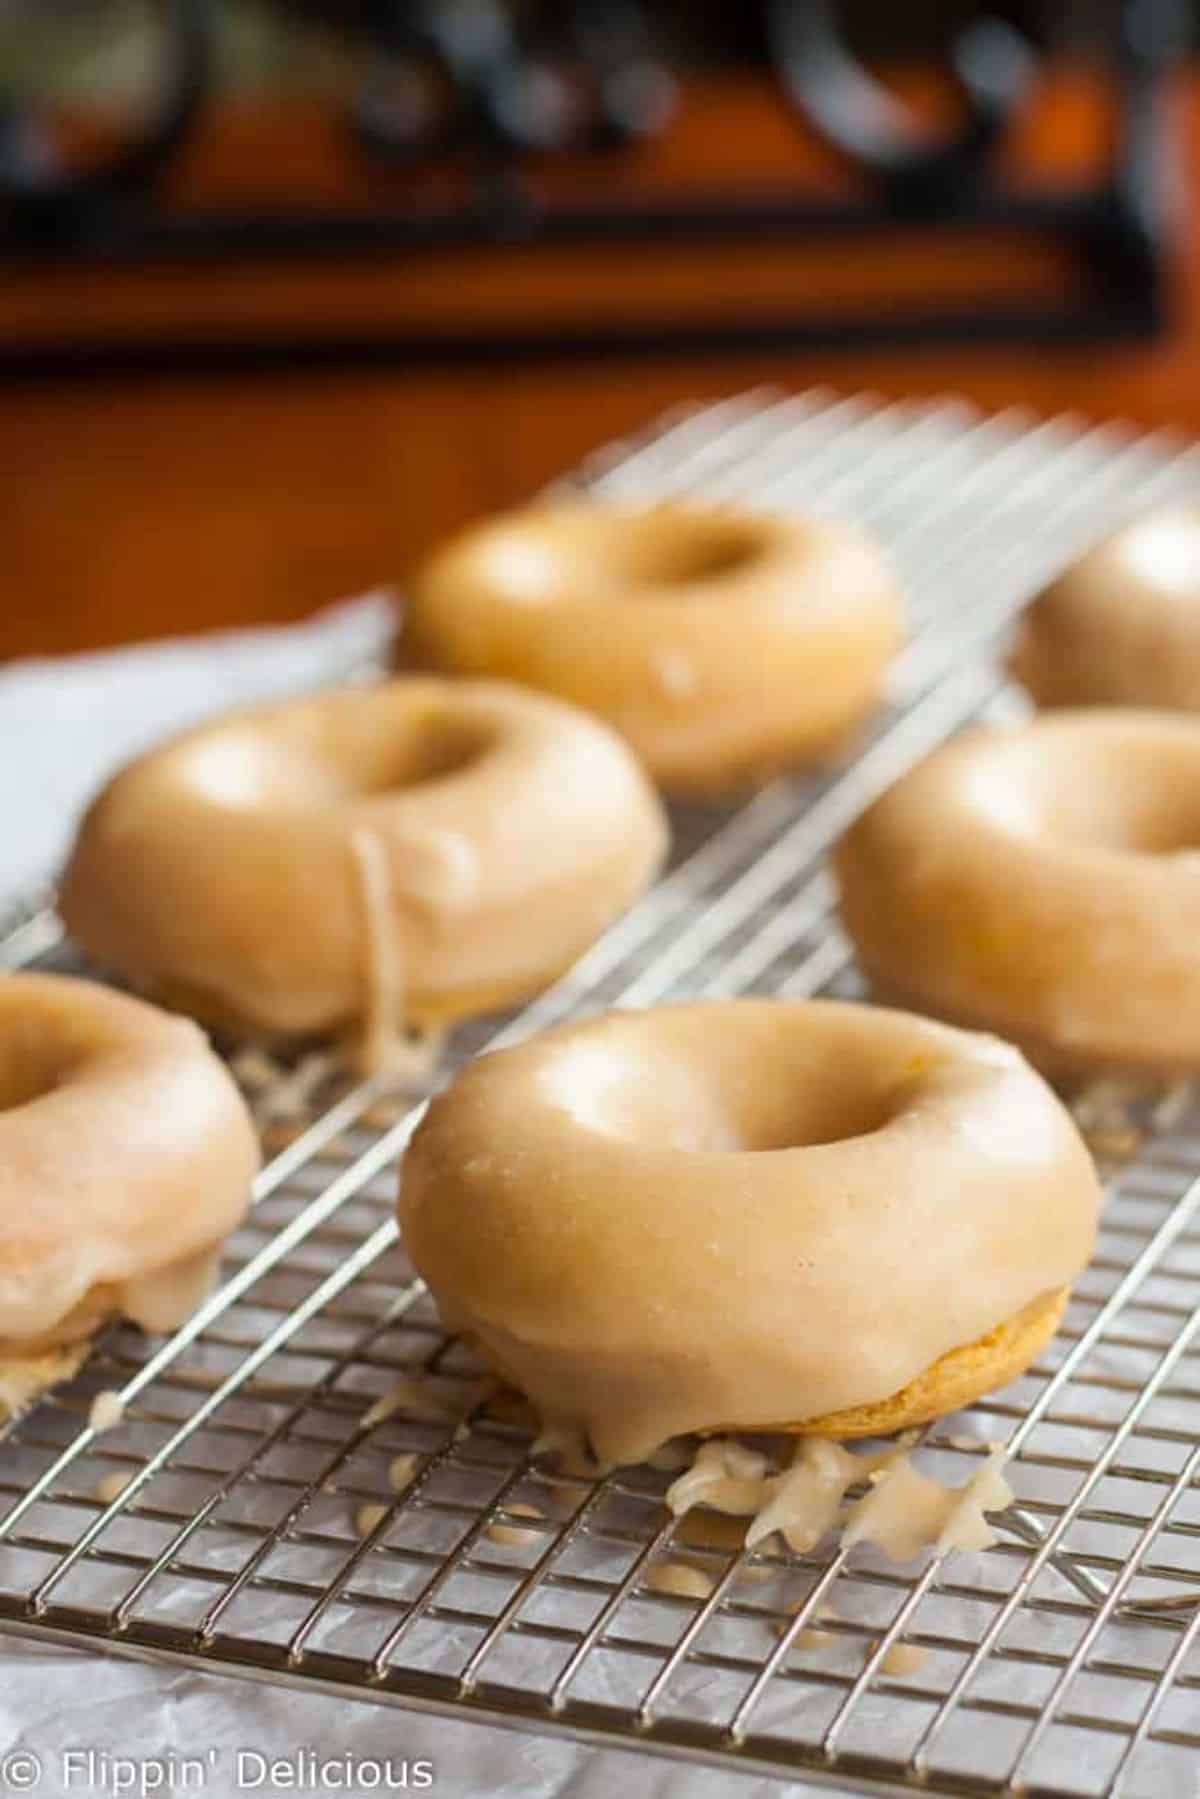 Gluten-free Pumpkin Donuts with Maple Glaze on a baking grid.